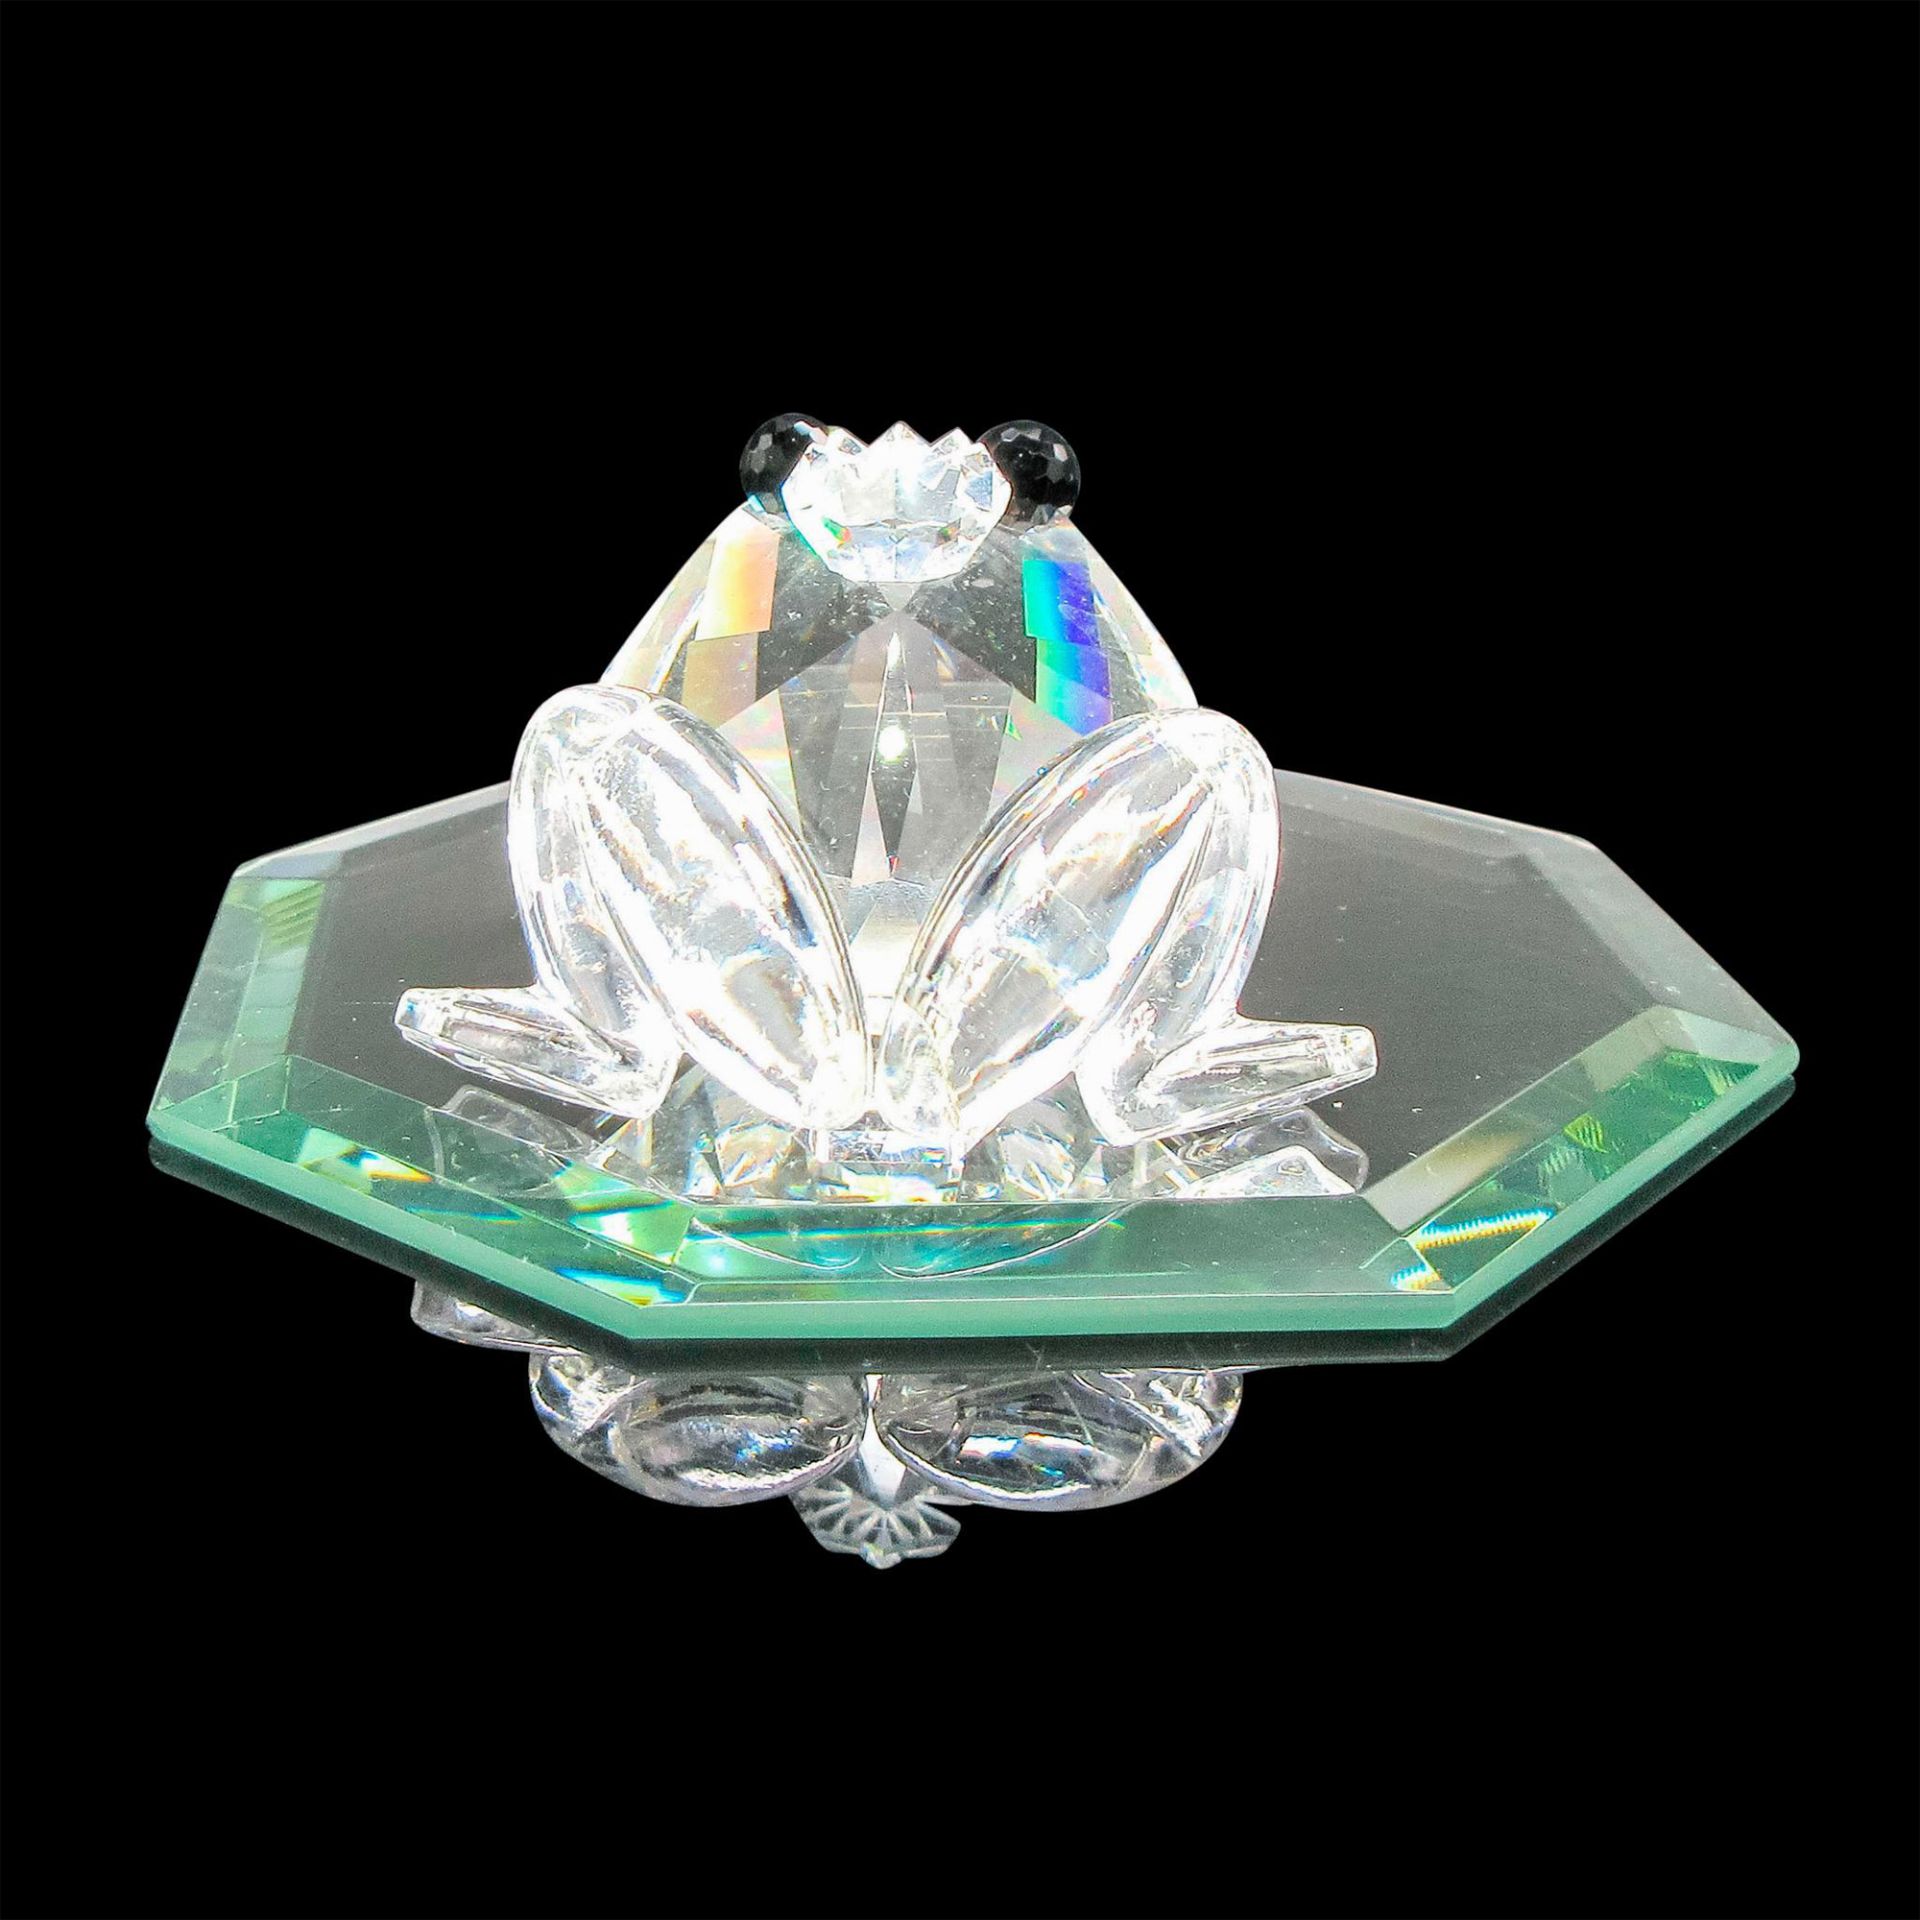 Swarovski Crystal Figurines, Frog Prince - Image 2 of 3